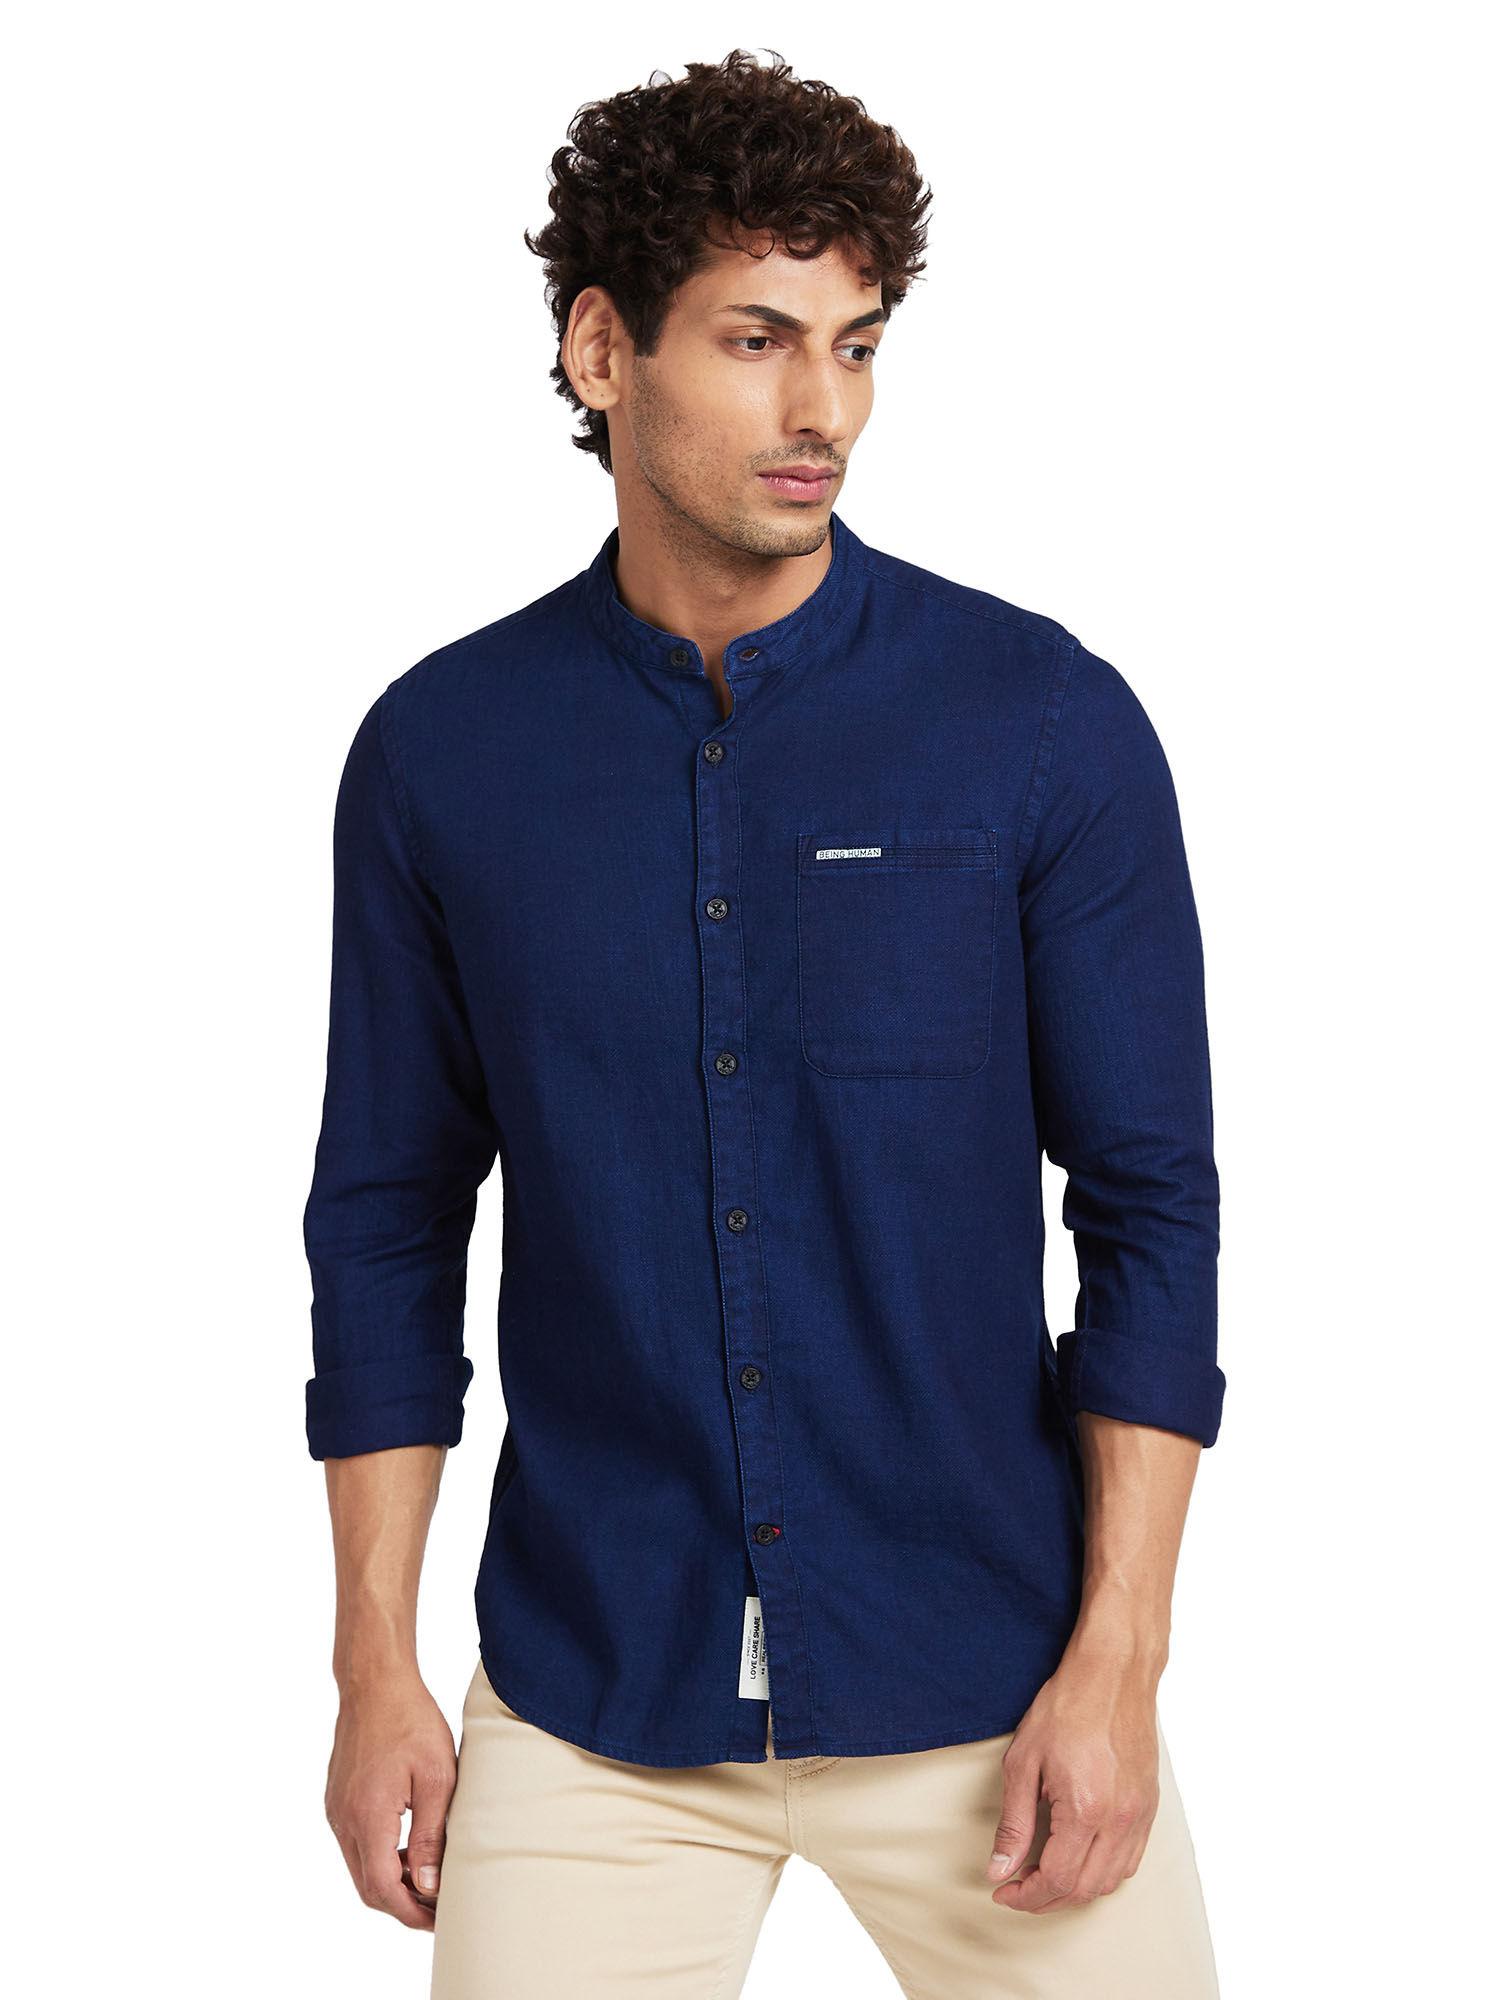 men full sleeves navy blue solid casual shirt